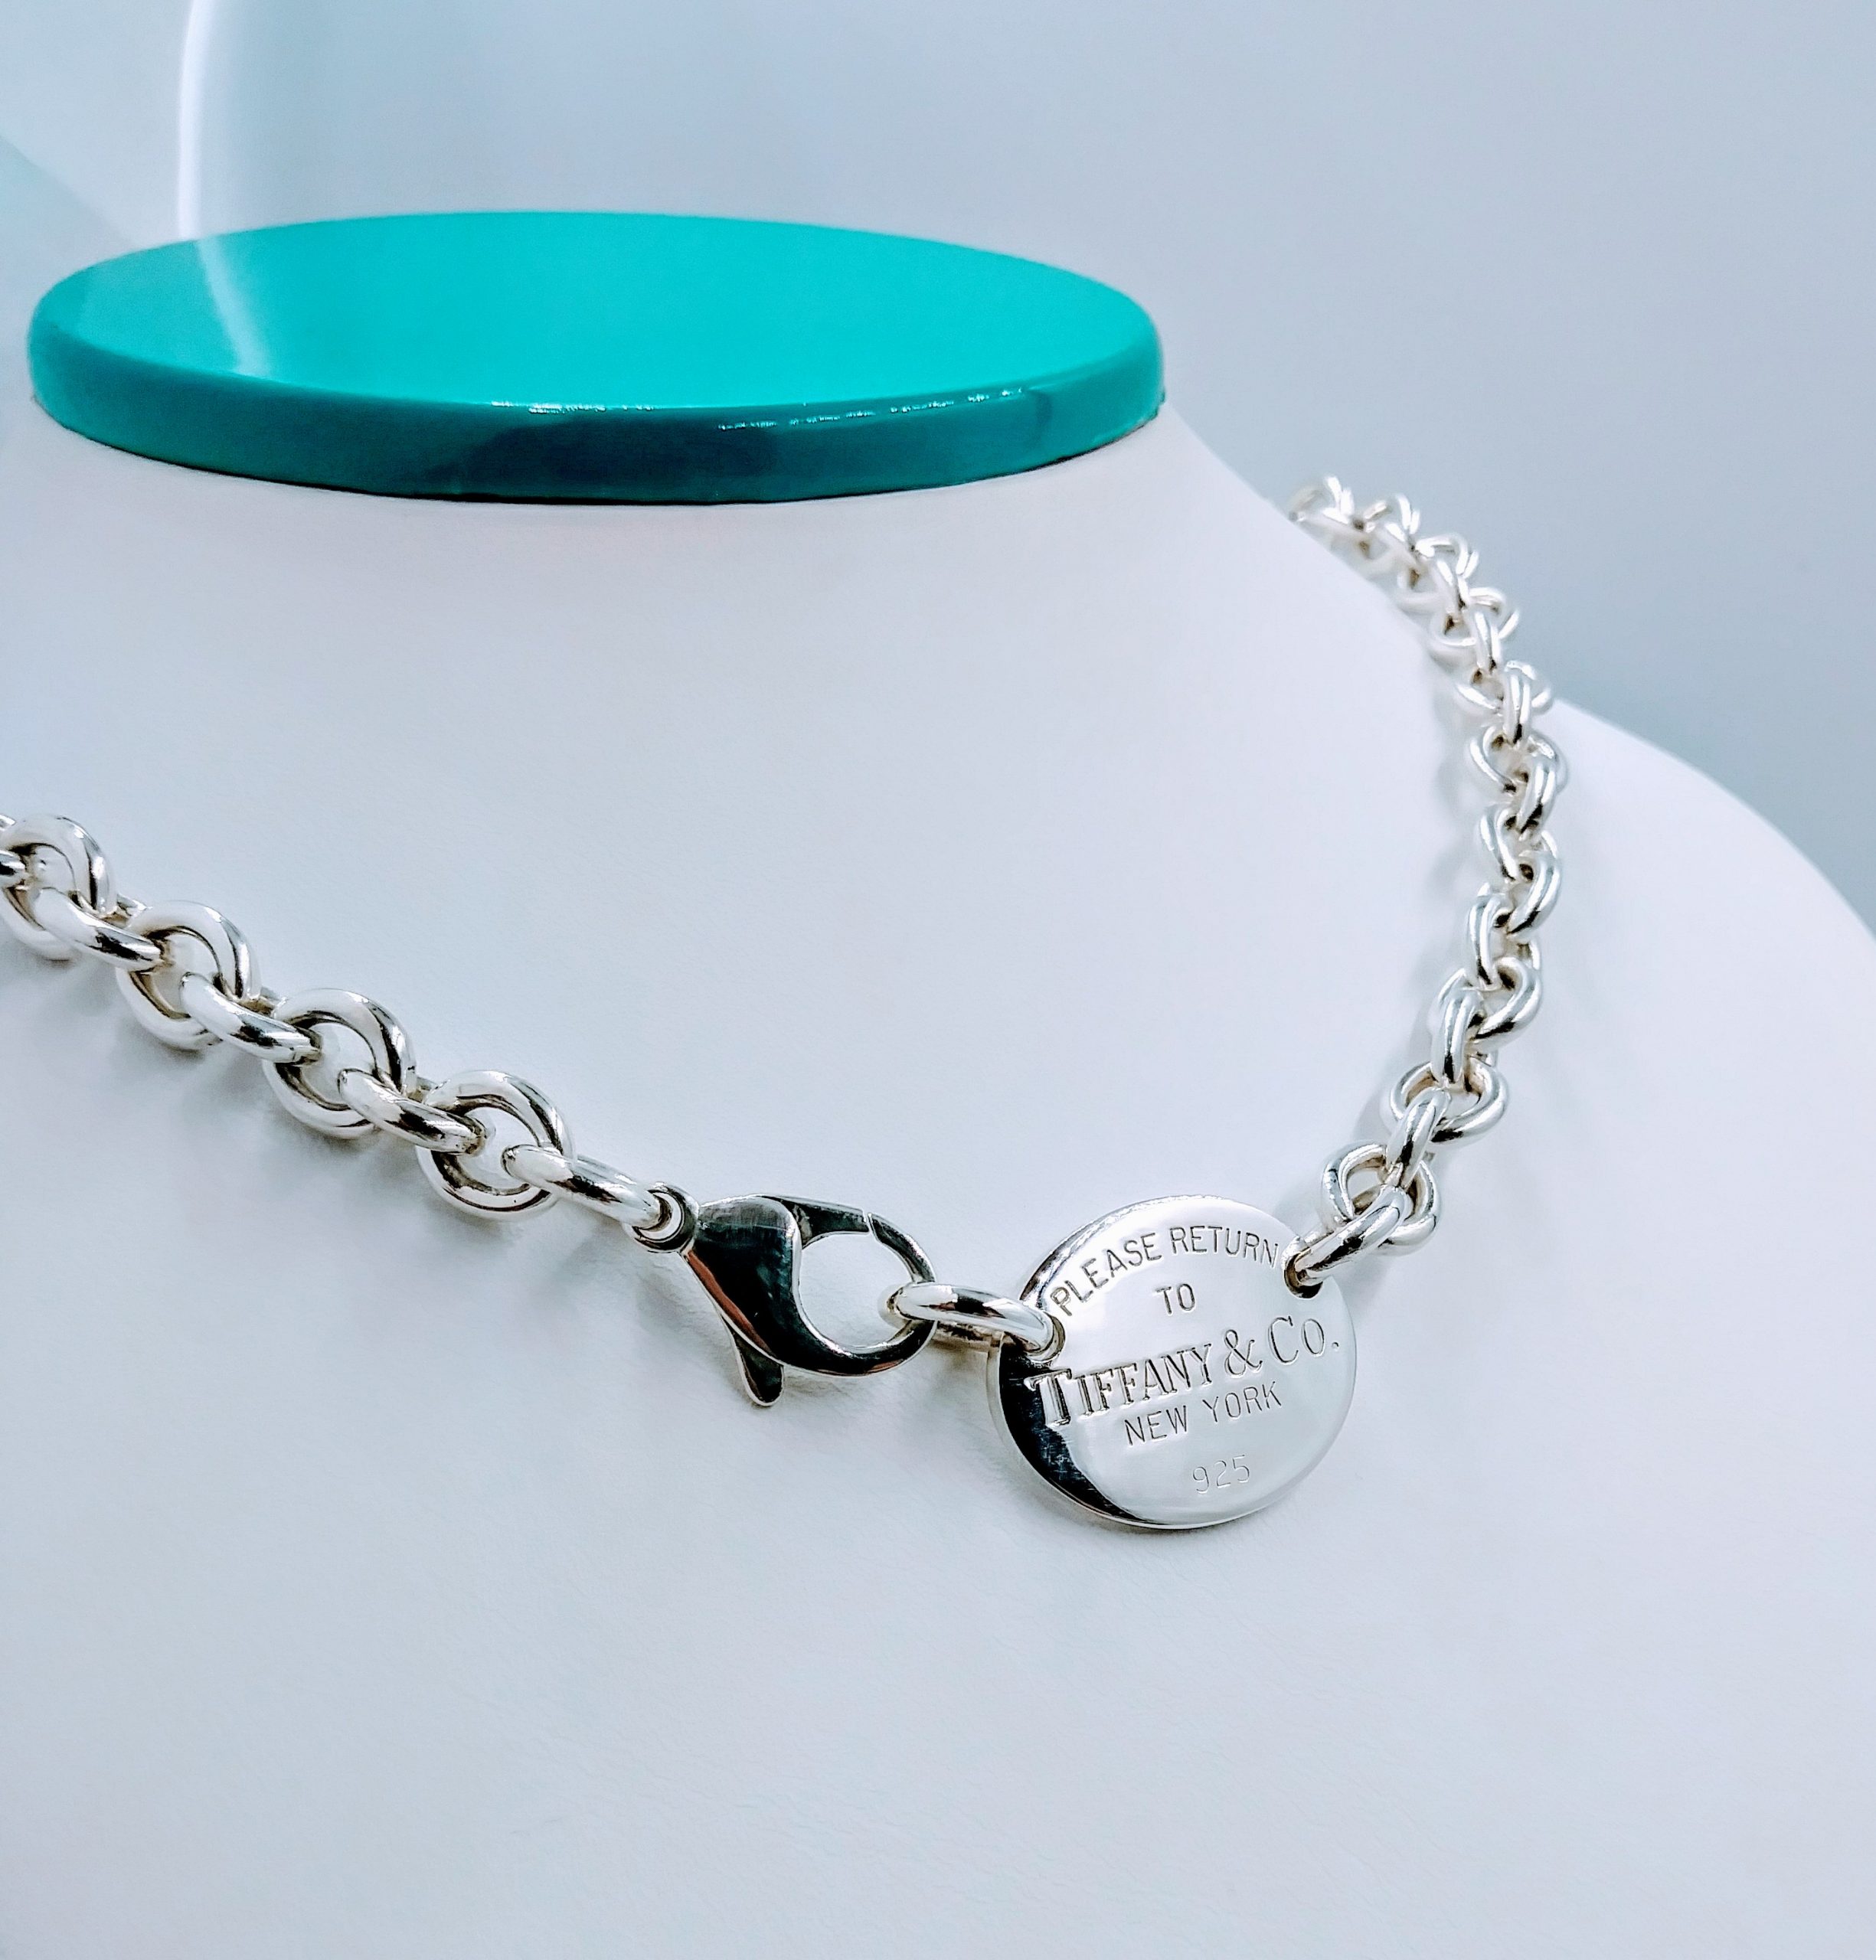 Tiffany & Co. Return to Tiffany Oval Tag Necklace Sterling Silver | eBay